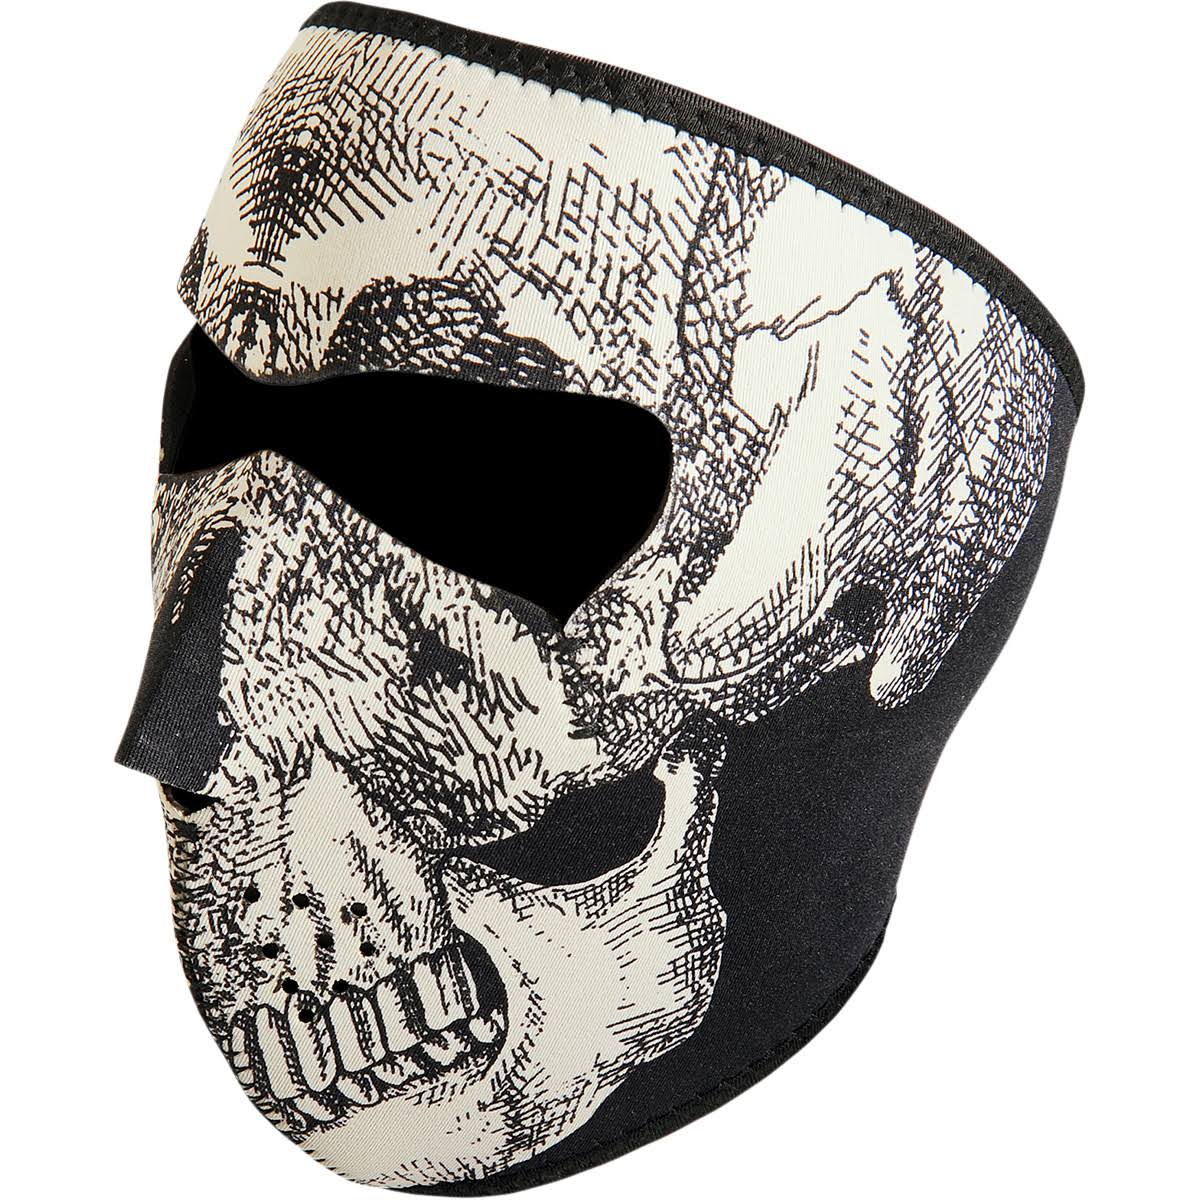 Zan Headgear Glow In The Dark Skull Neoprene Full Face Mask - White